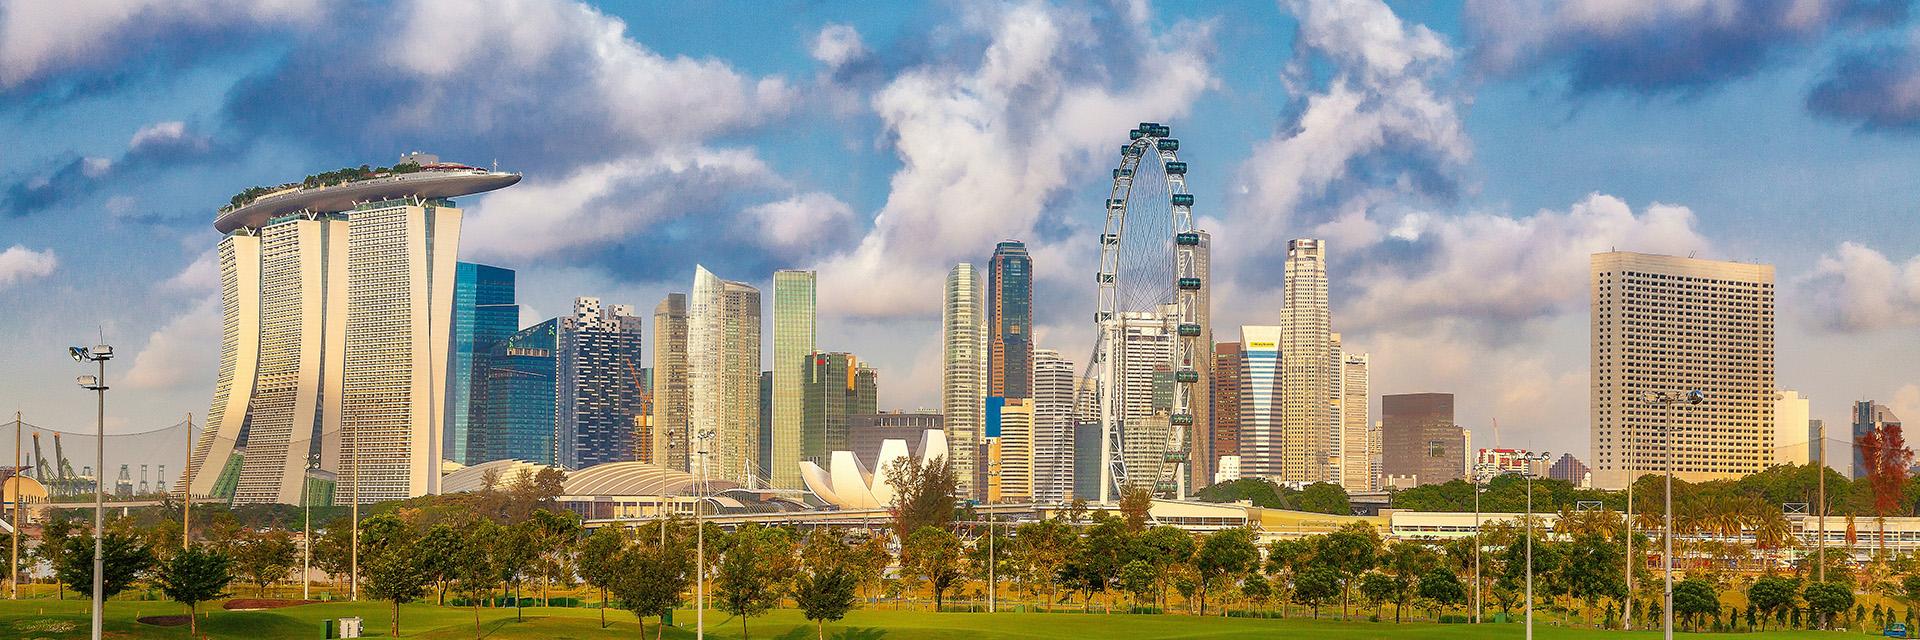 Singapore skyline featuring London Eye